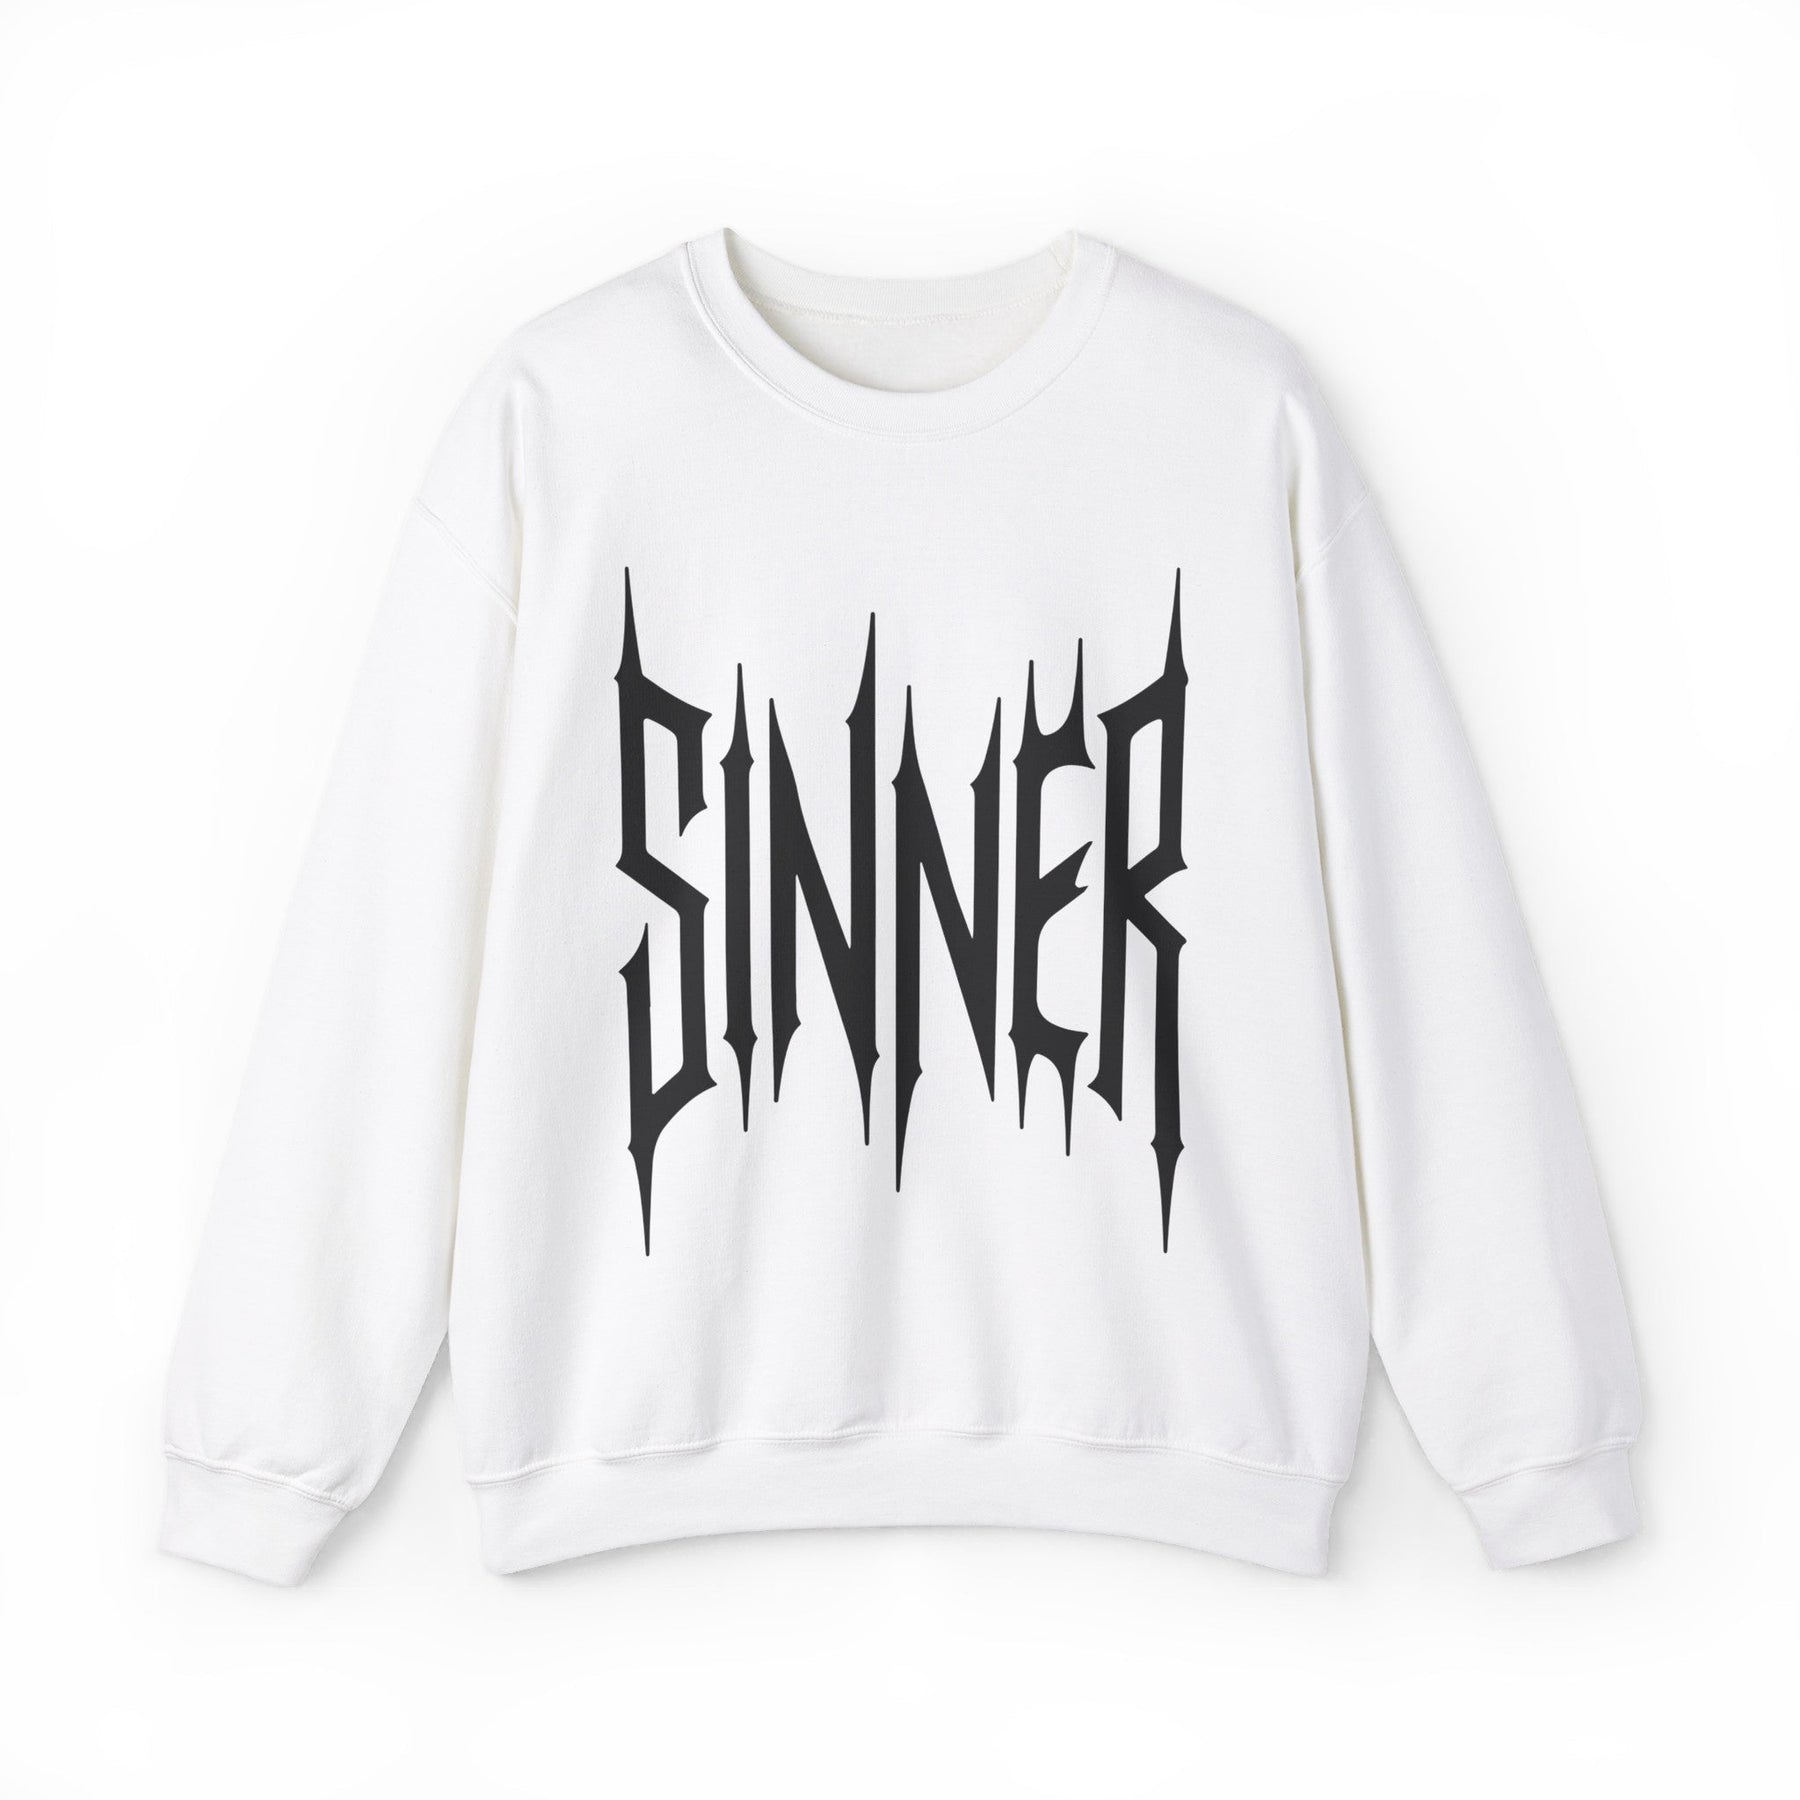 Sinner Unisex Sweatshirt - Goth Cloth Co.Sweatshirt24649175150651317618